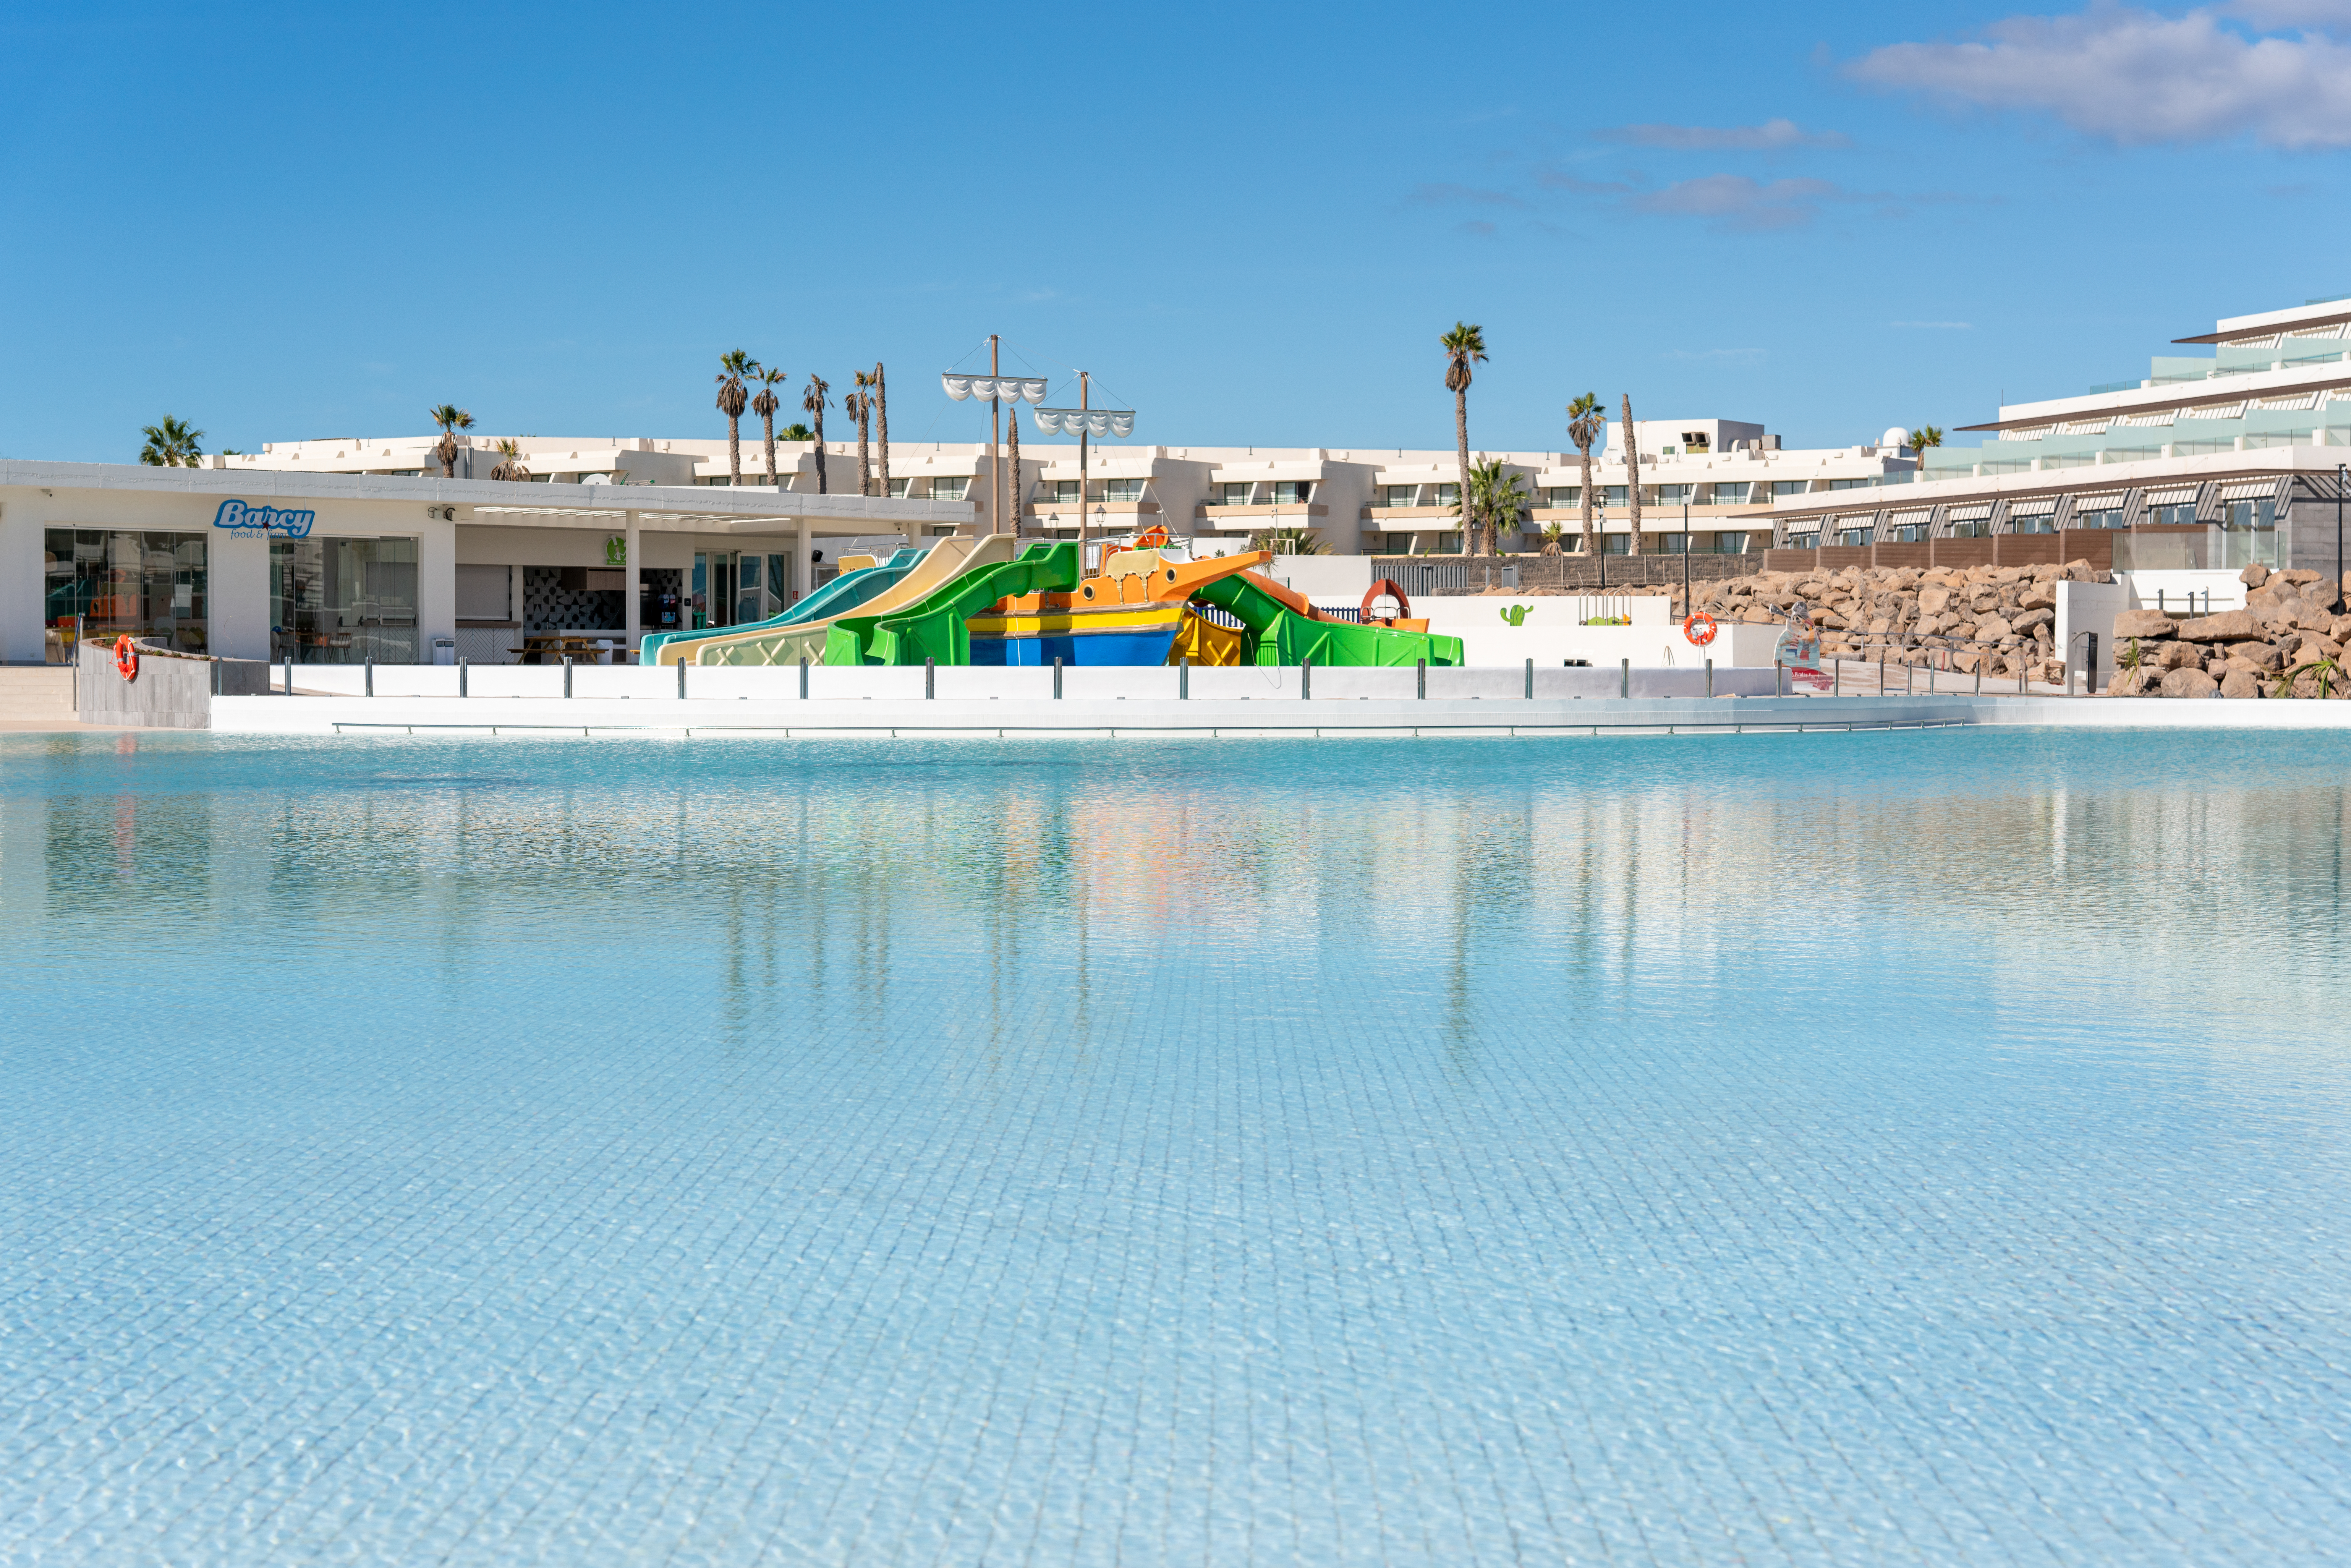 The incredible infinity pool is 180 metres long